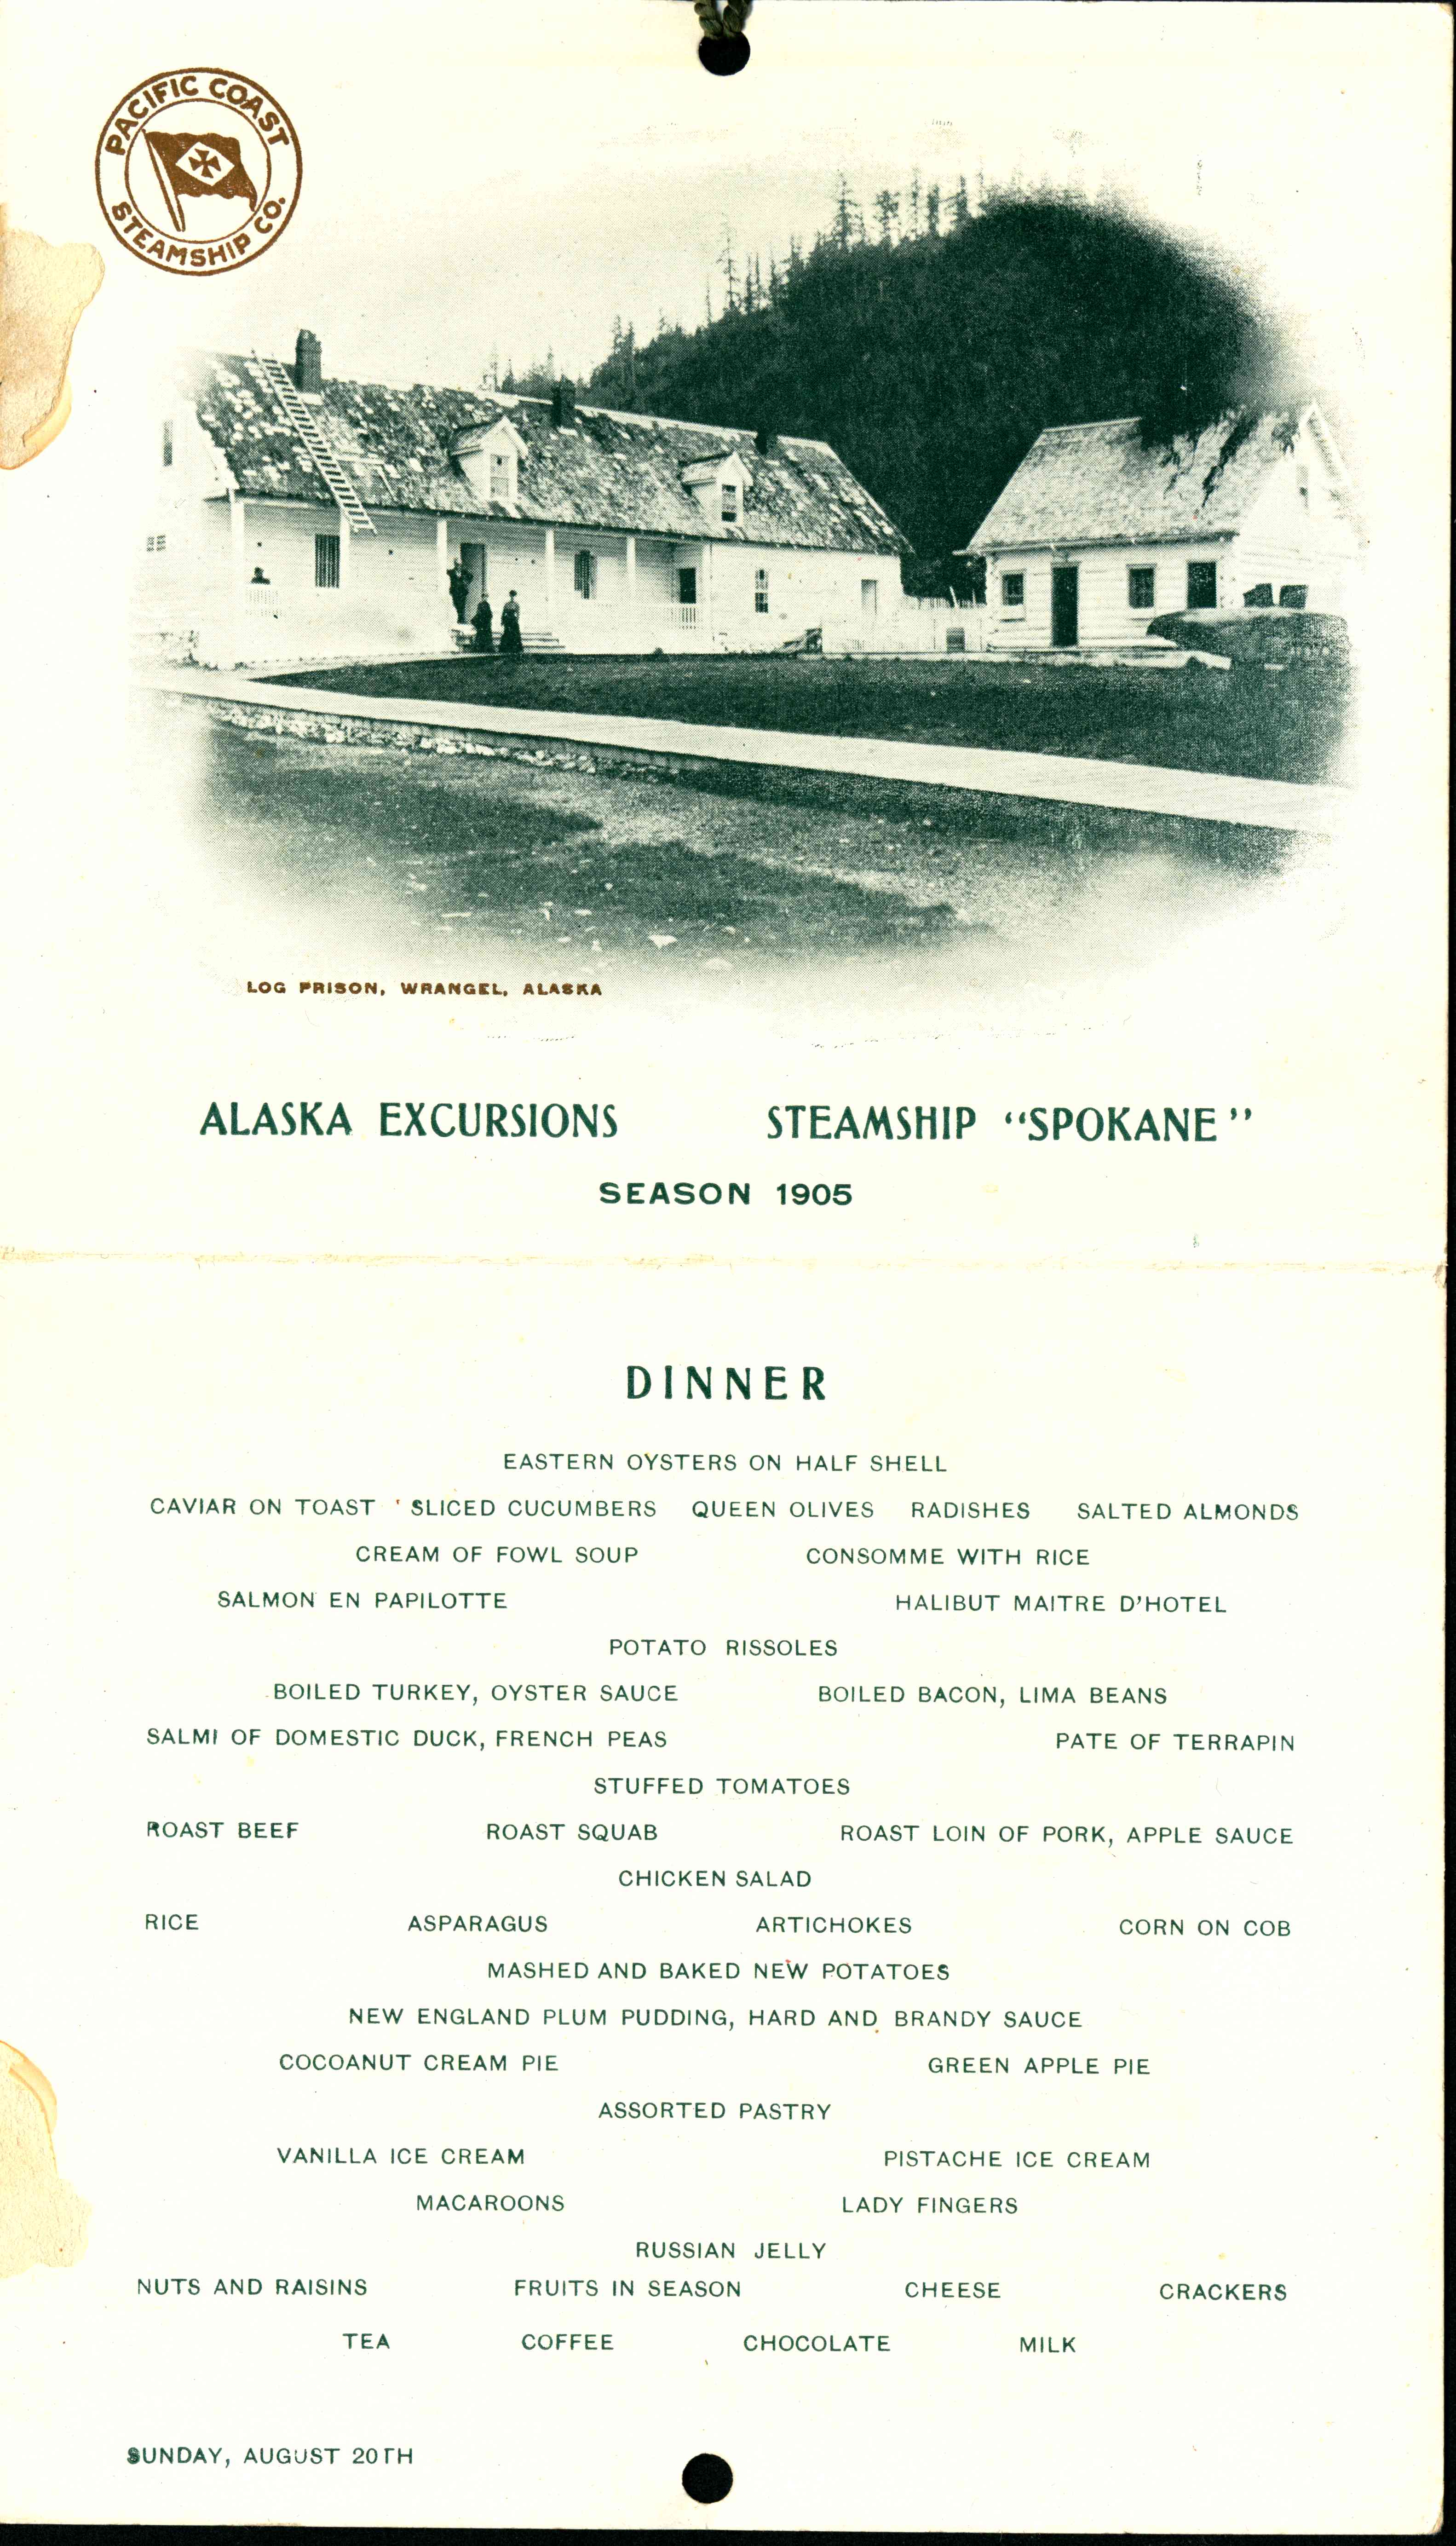 Picture of Log prison, Wrangel, Alaska